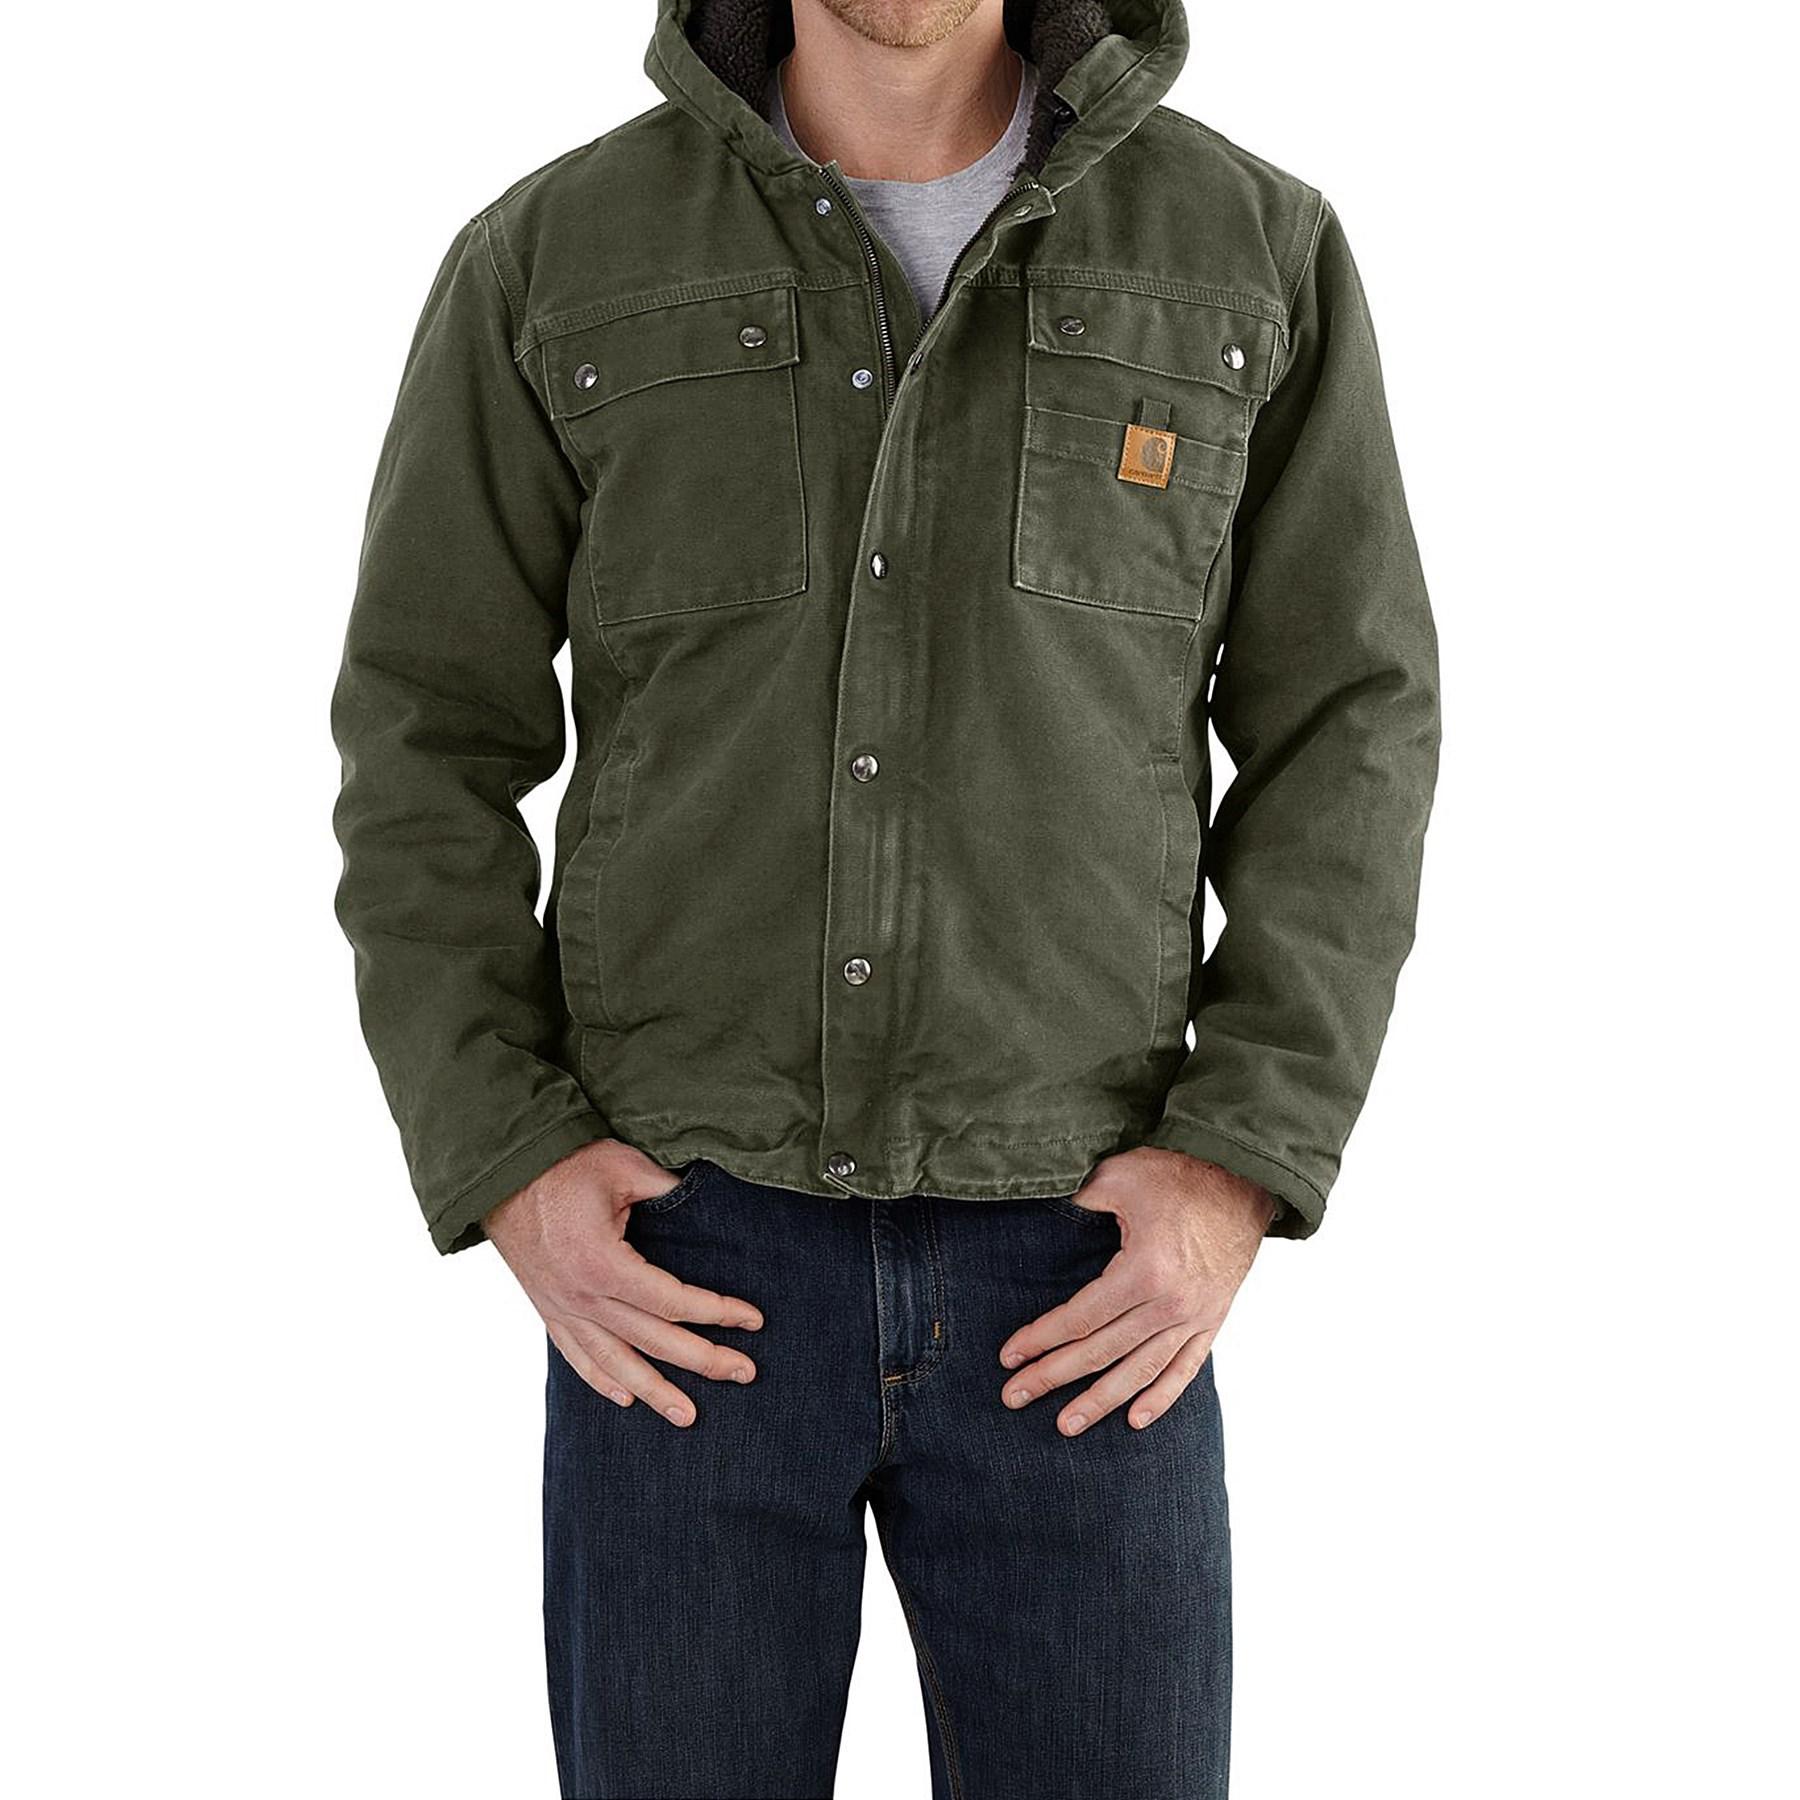 Carhartt Cotton Bartlett Sherpa-lined Jacket in Moss (Green) for Men - Lyst